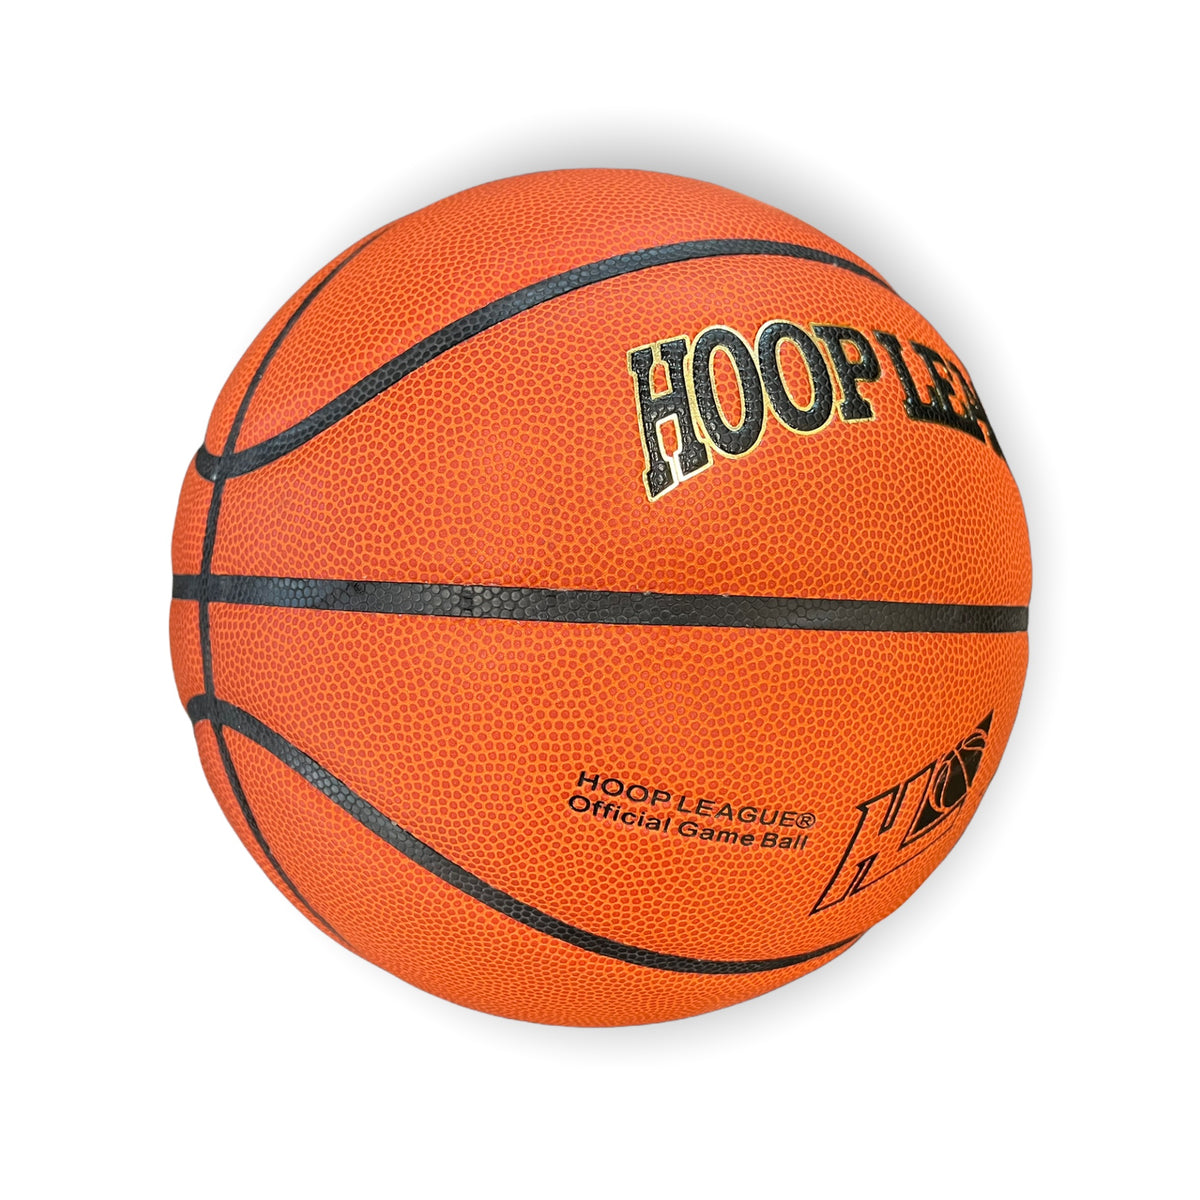 Hoop League MAX GRiP Top Microfiber Leather Indoor Game Basketball Size 29.5 ORANGE - Hoop League 